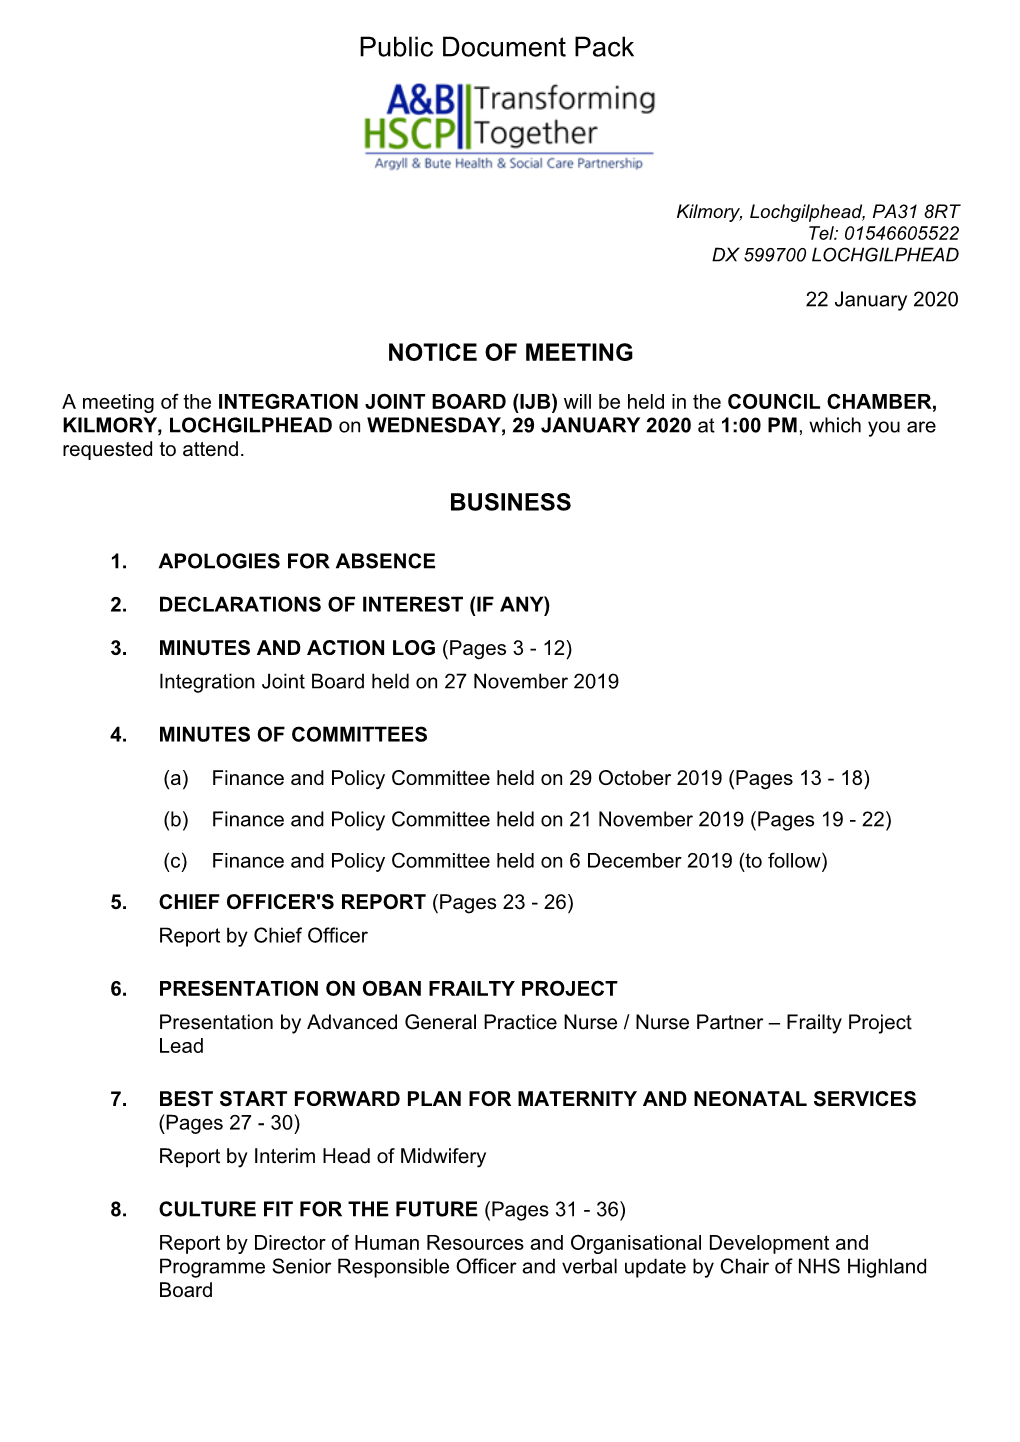 Public Pack)Agenda Document for Integration Joint Board (IJB